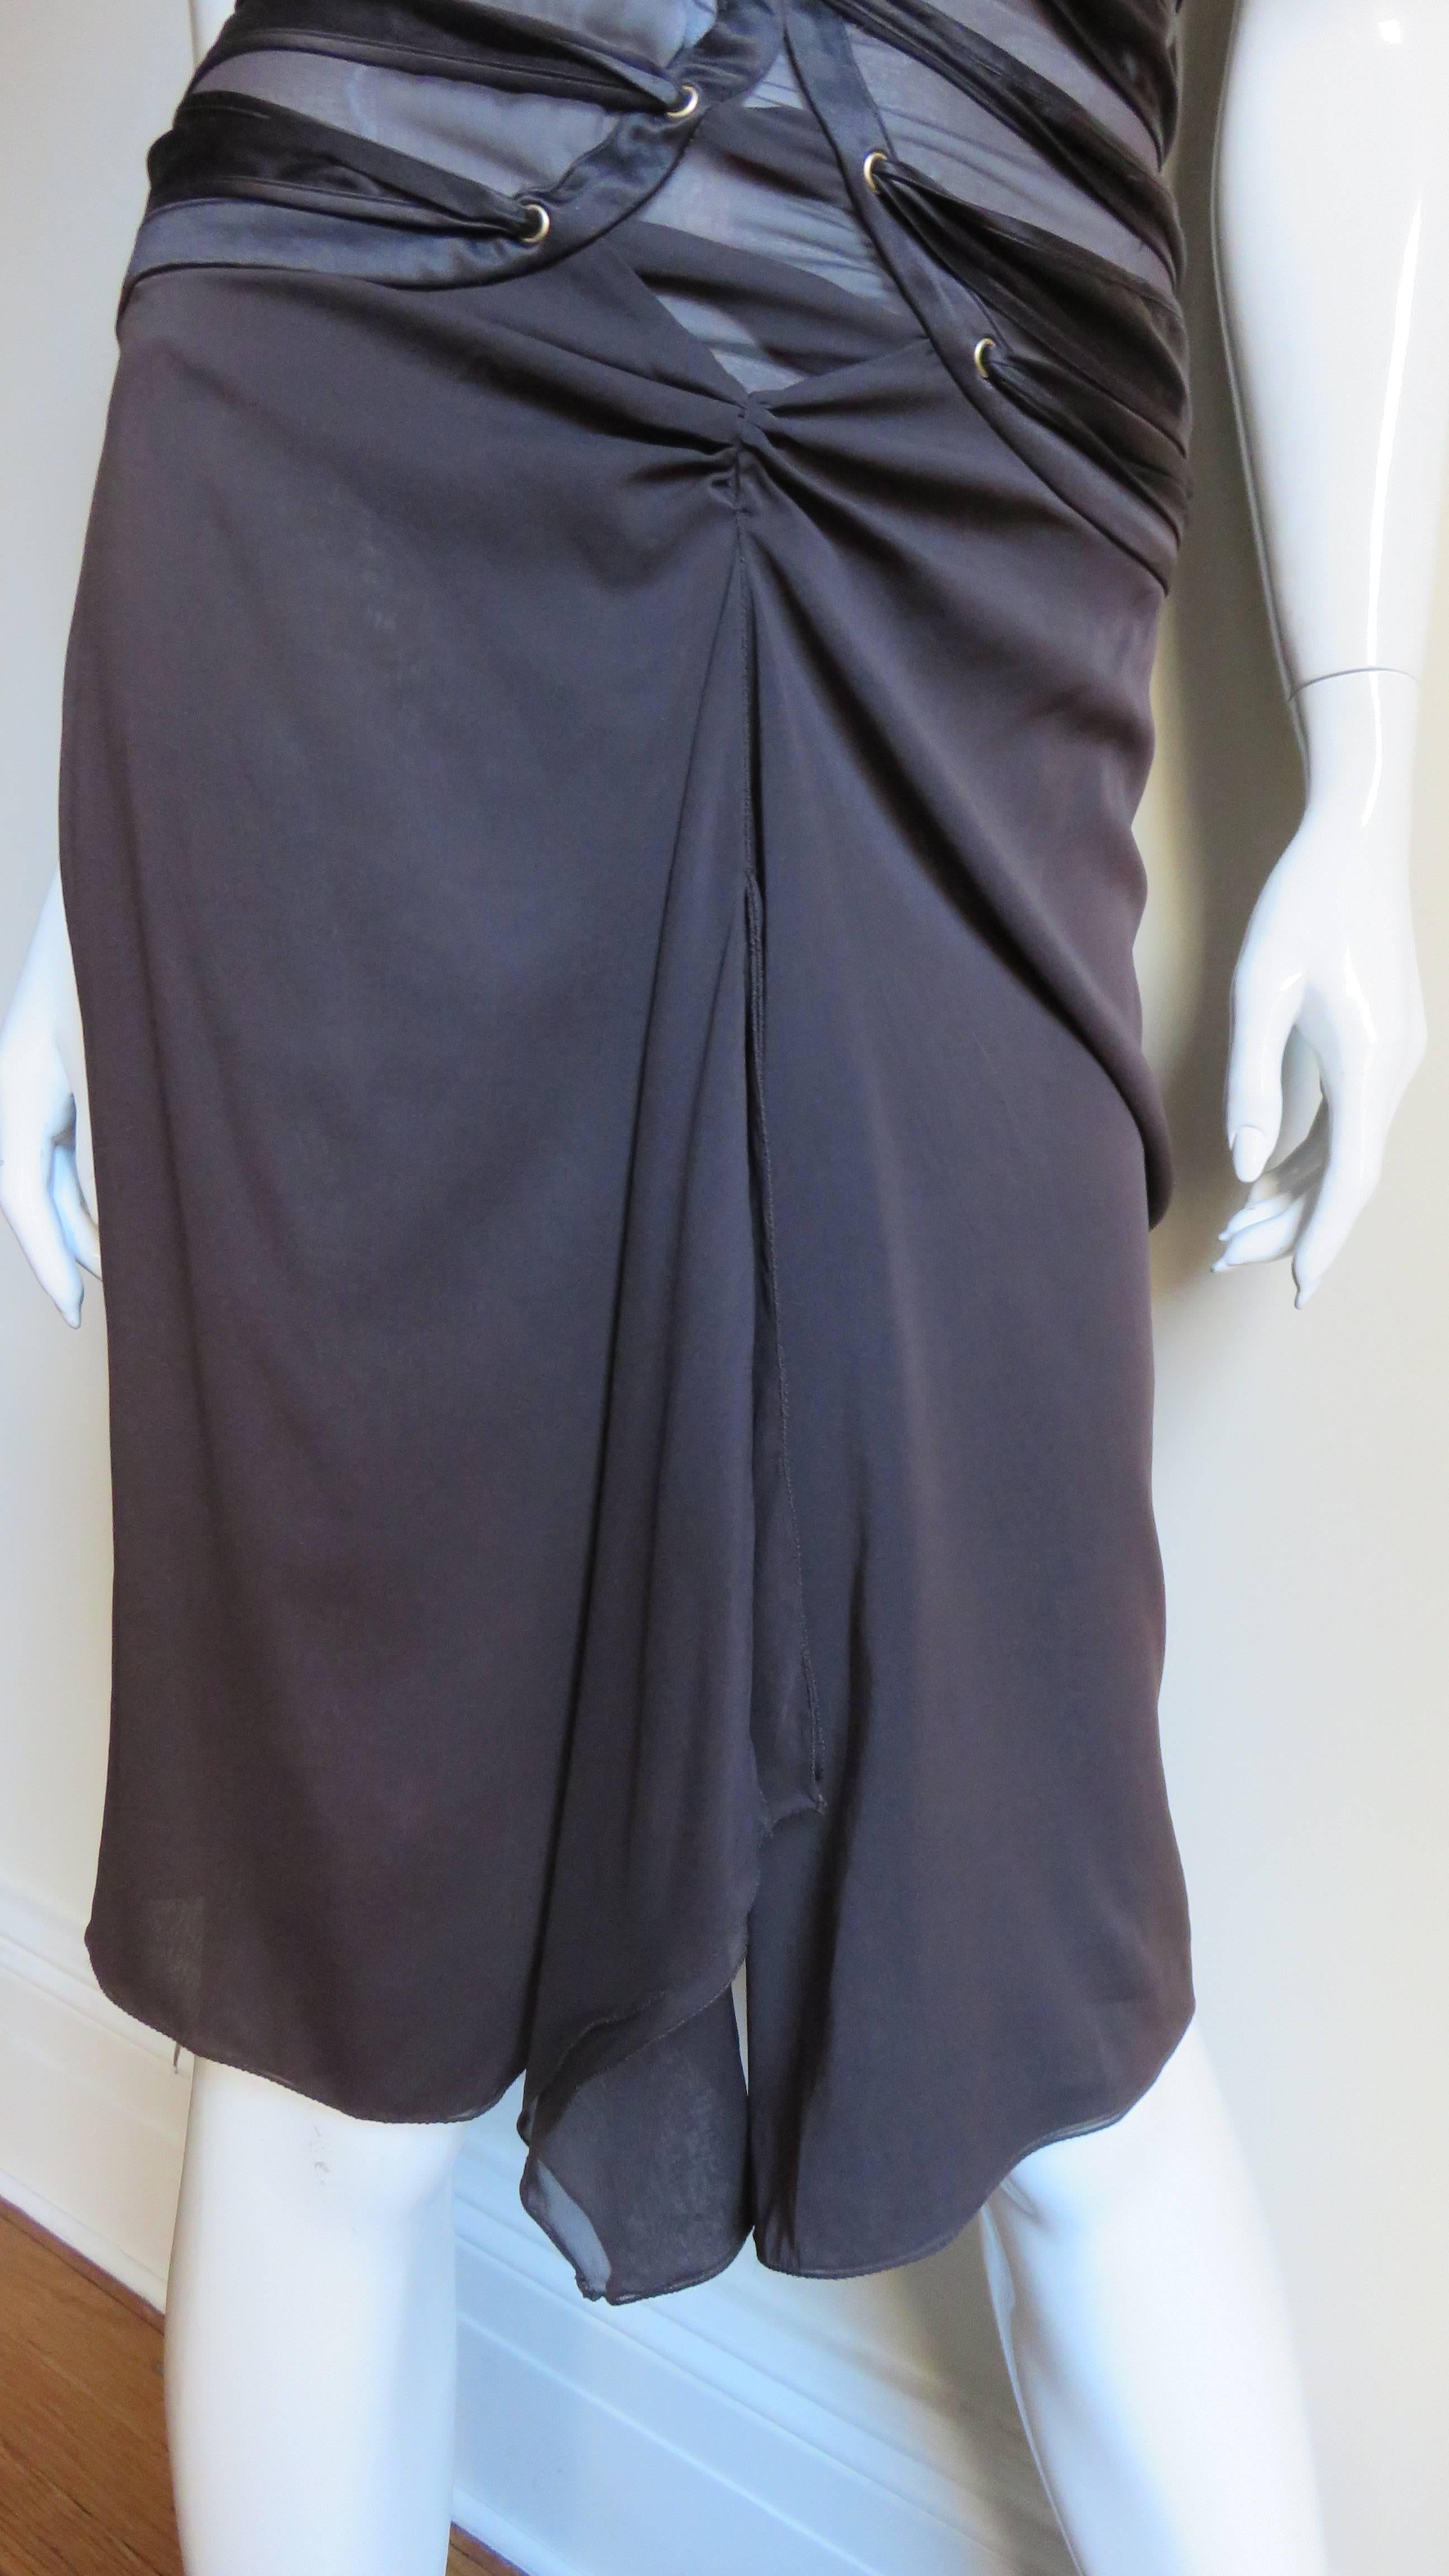 black silk halter dress